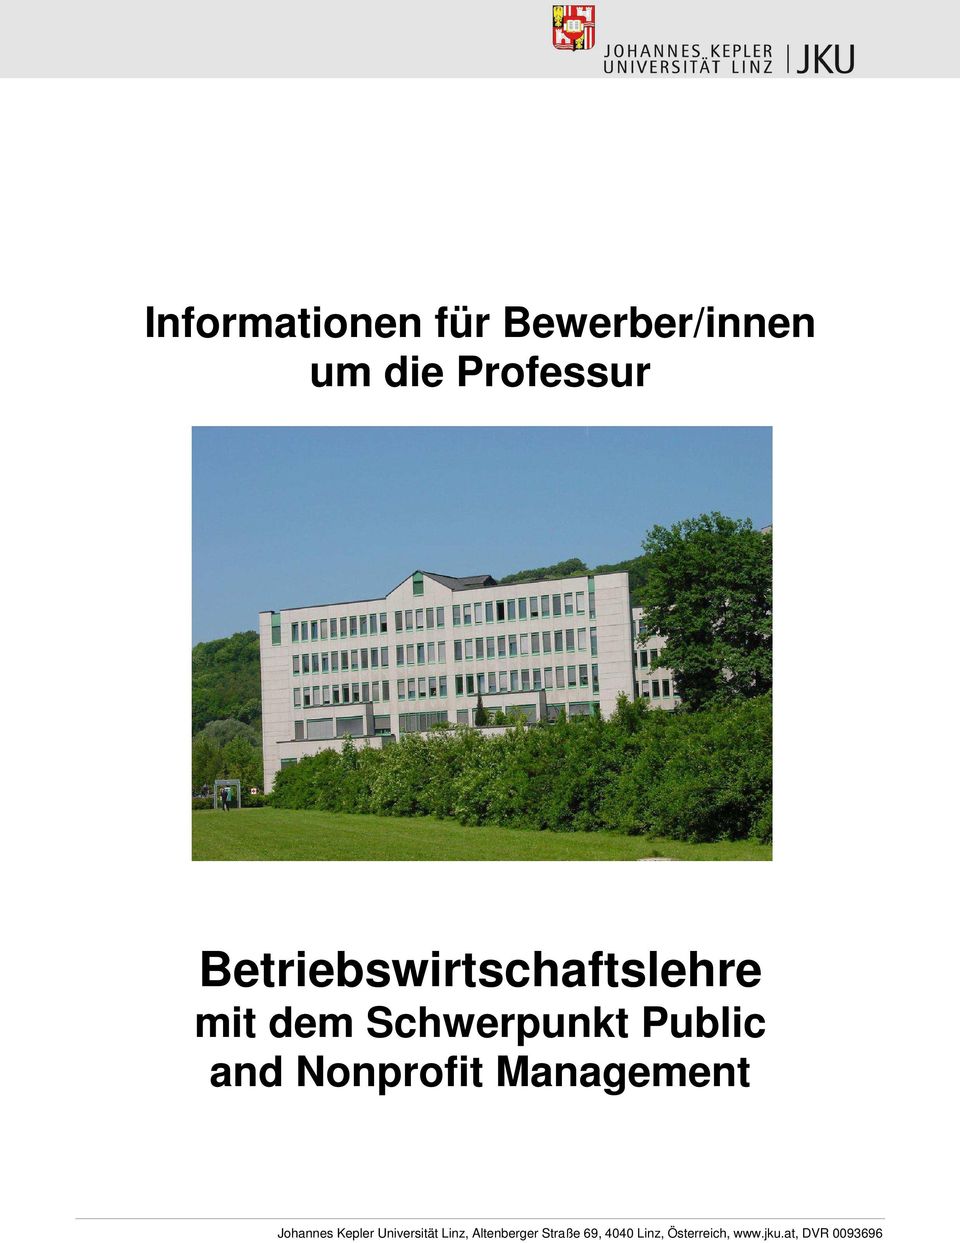 Nonprofit Management Johannes Kepler Universität Linz,